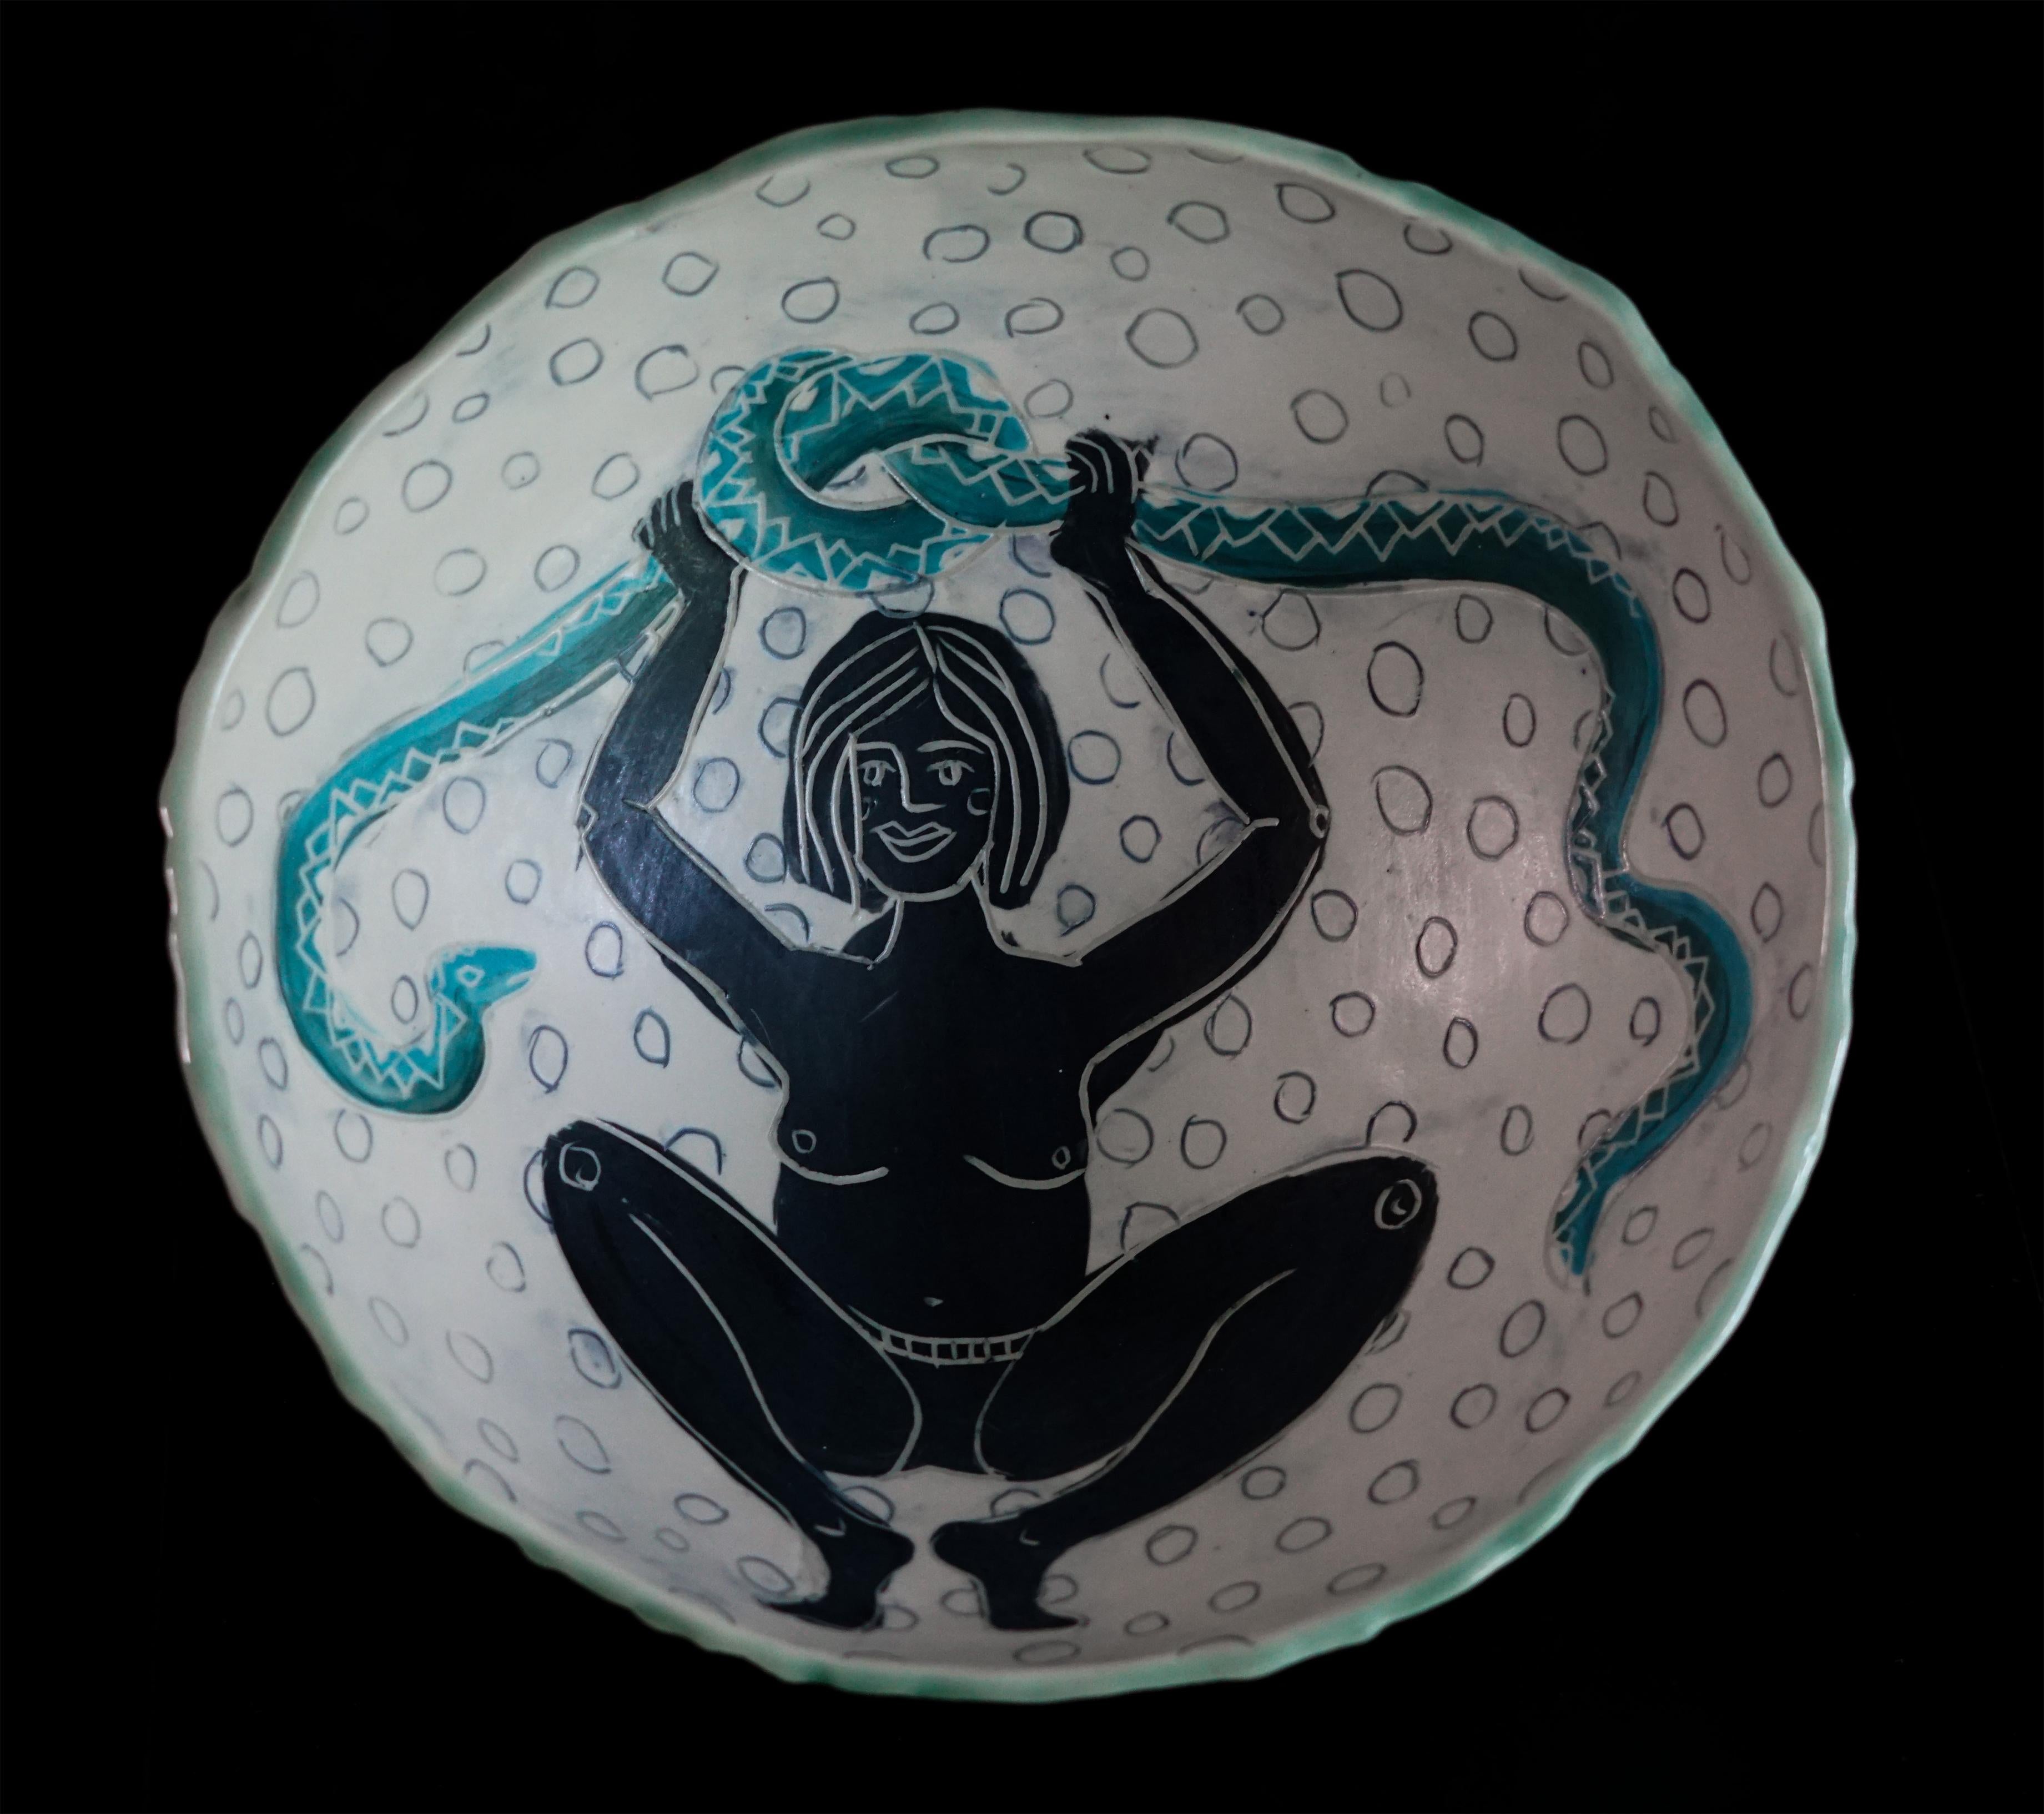 Alex Hodge Nude Sculpture - Eve in Prapadasana, Hand built Porcelain Bowl